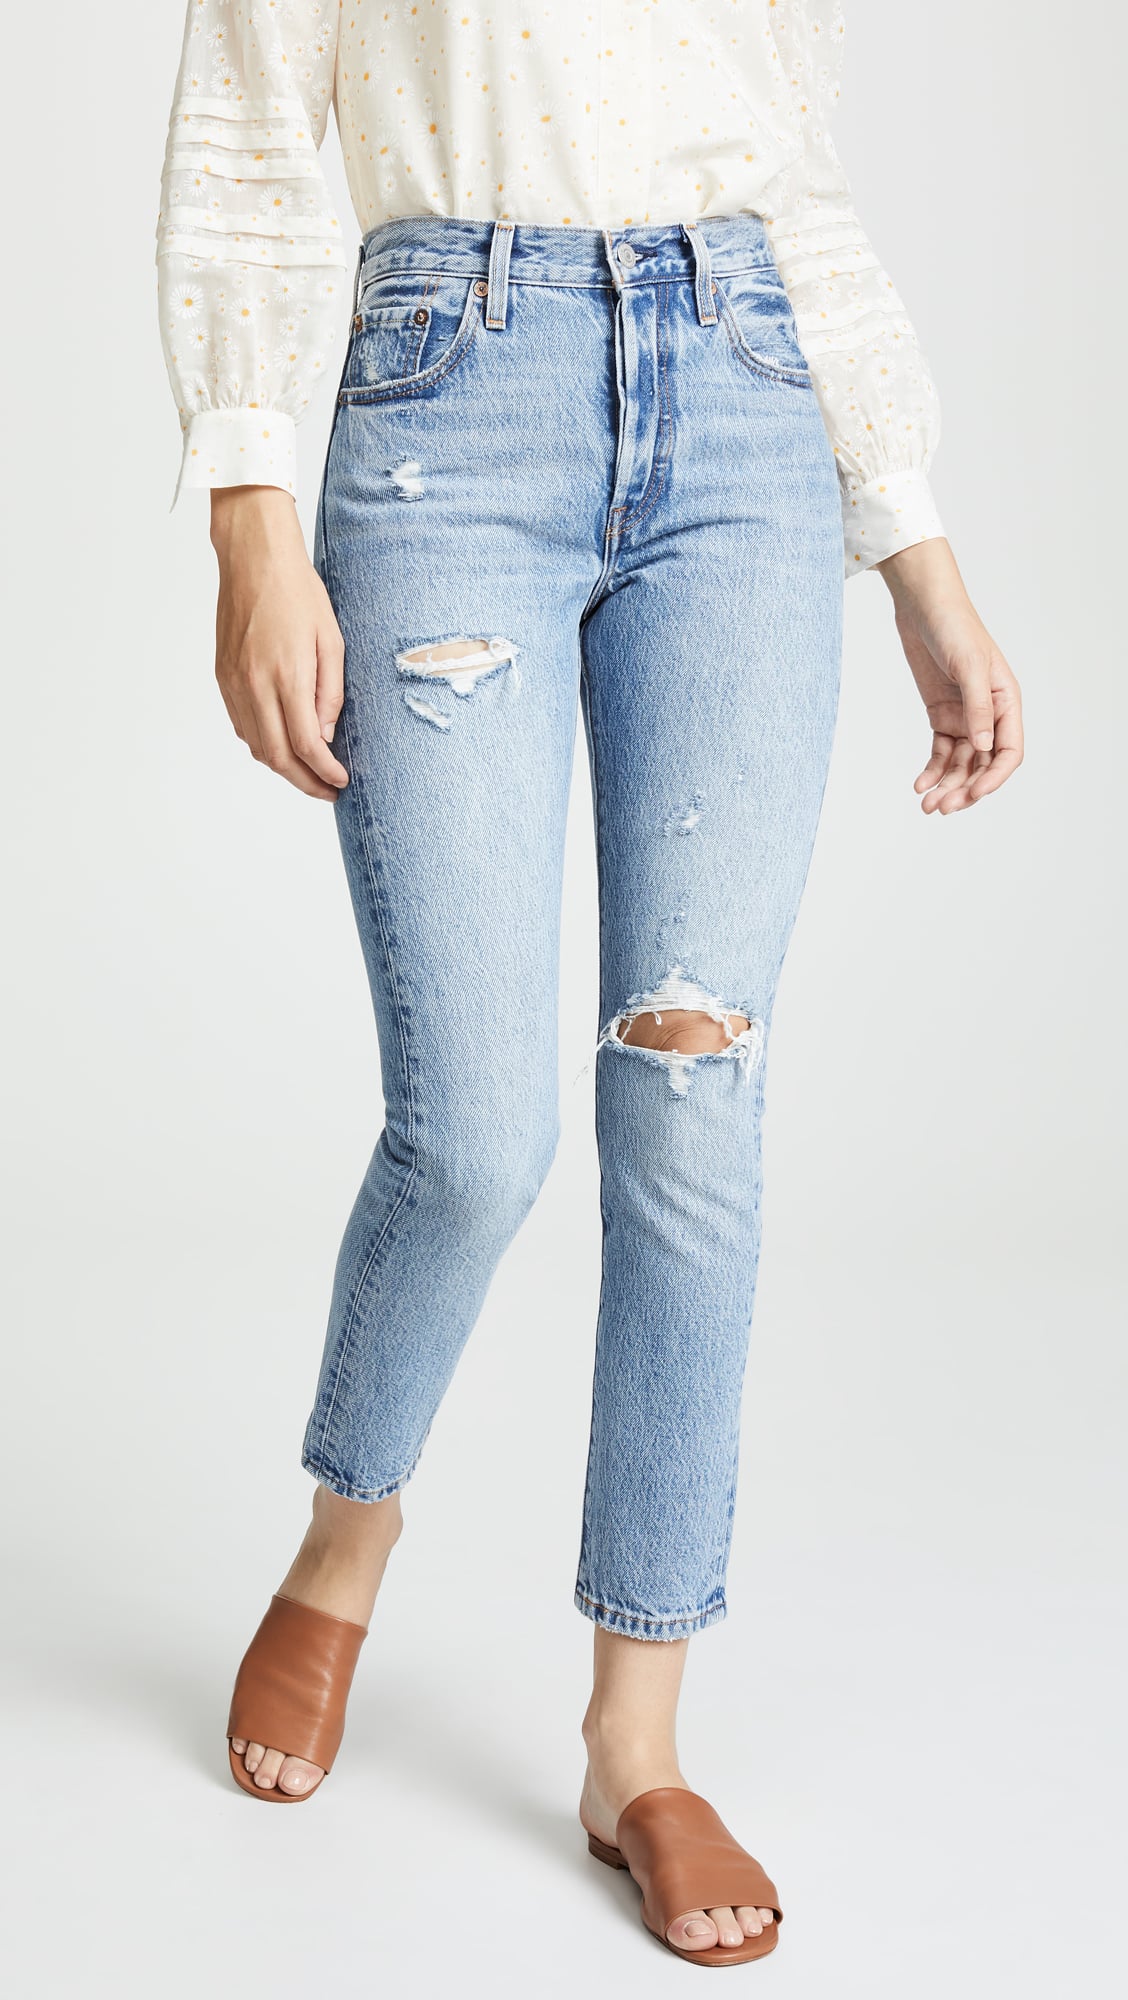 Brand Women's Skinny High Waist Jeans find